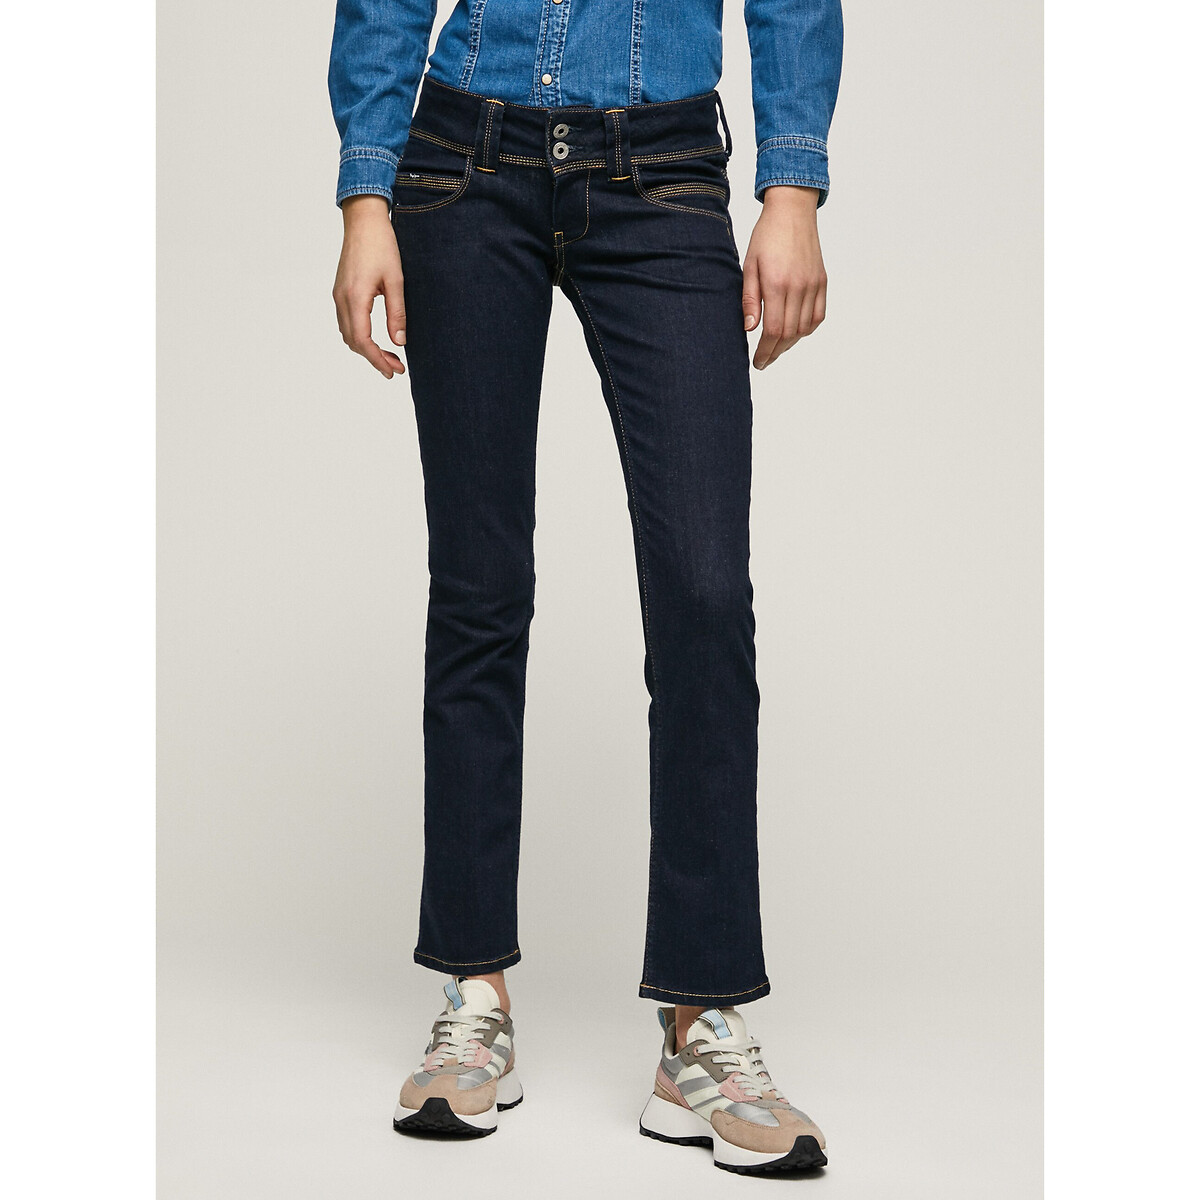 Regular-jeans venus, niedrige bundhöhe Pepe Jeans | La Redoute